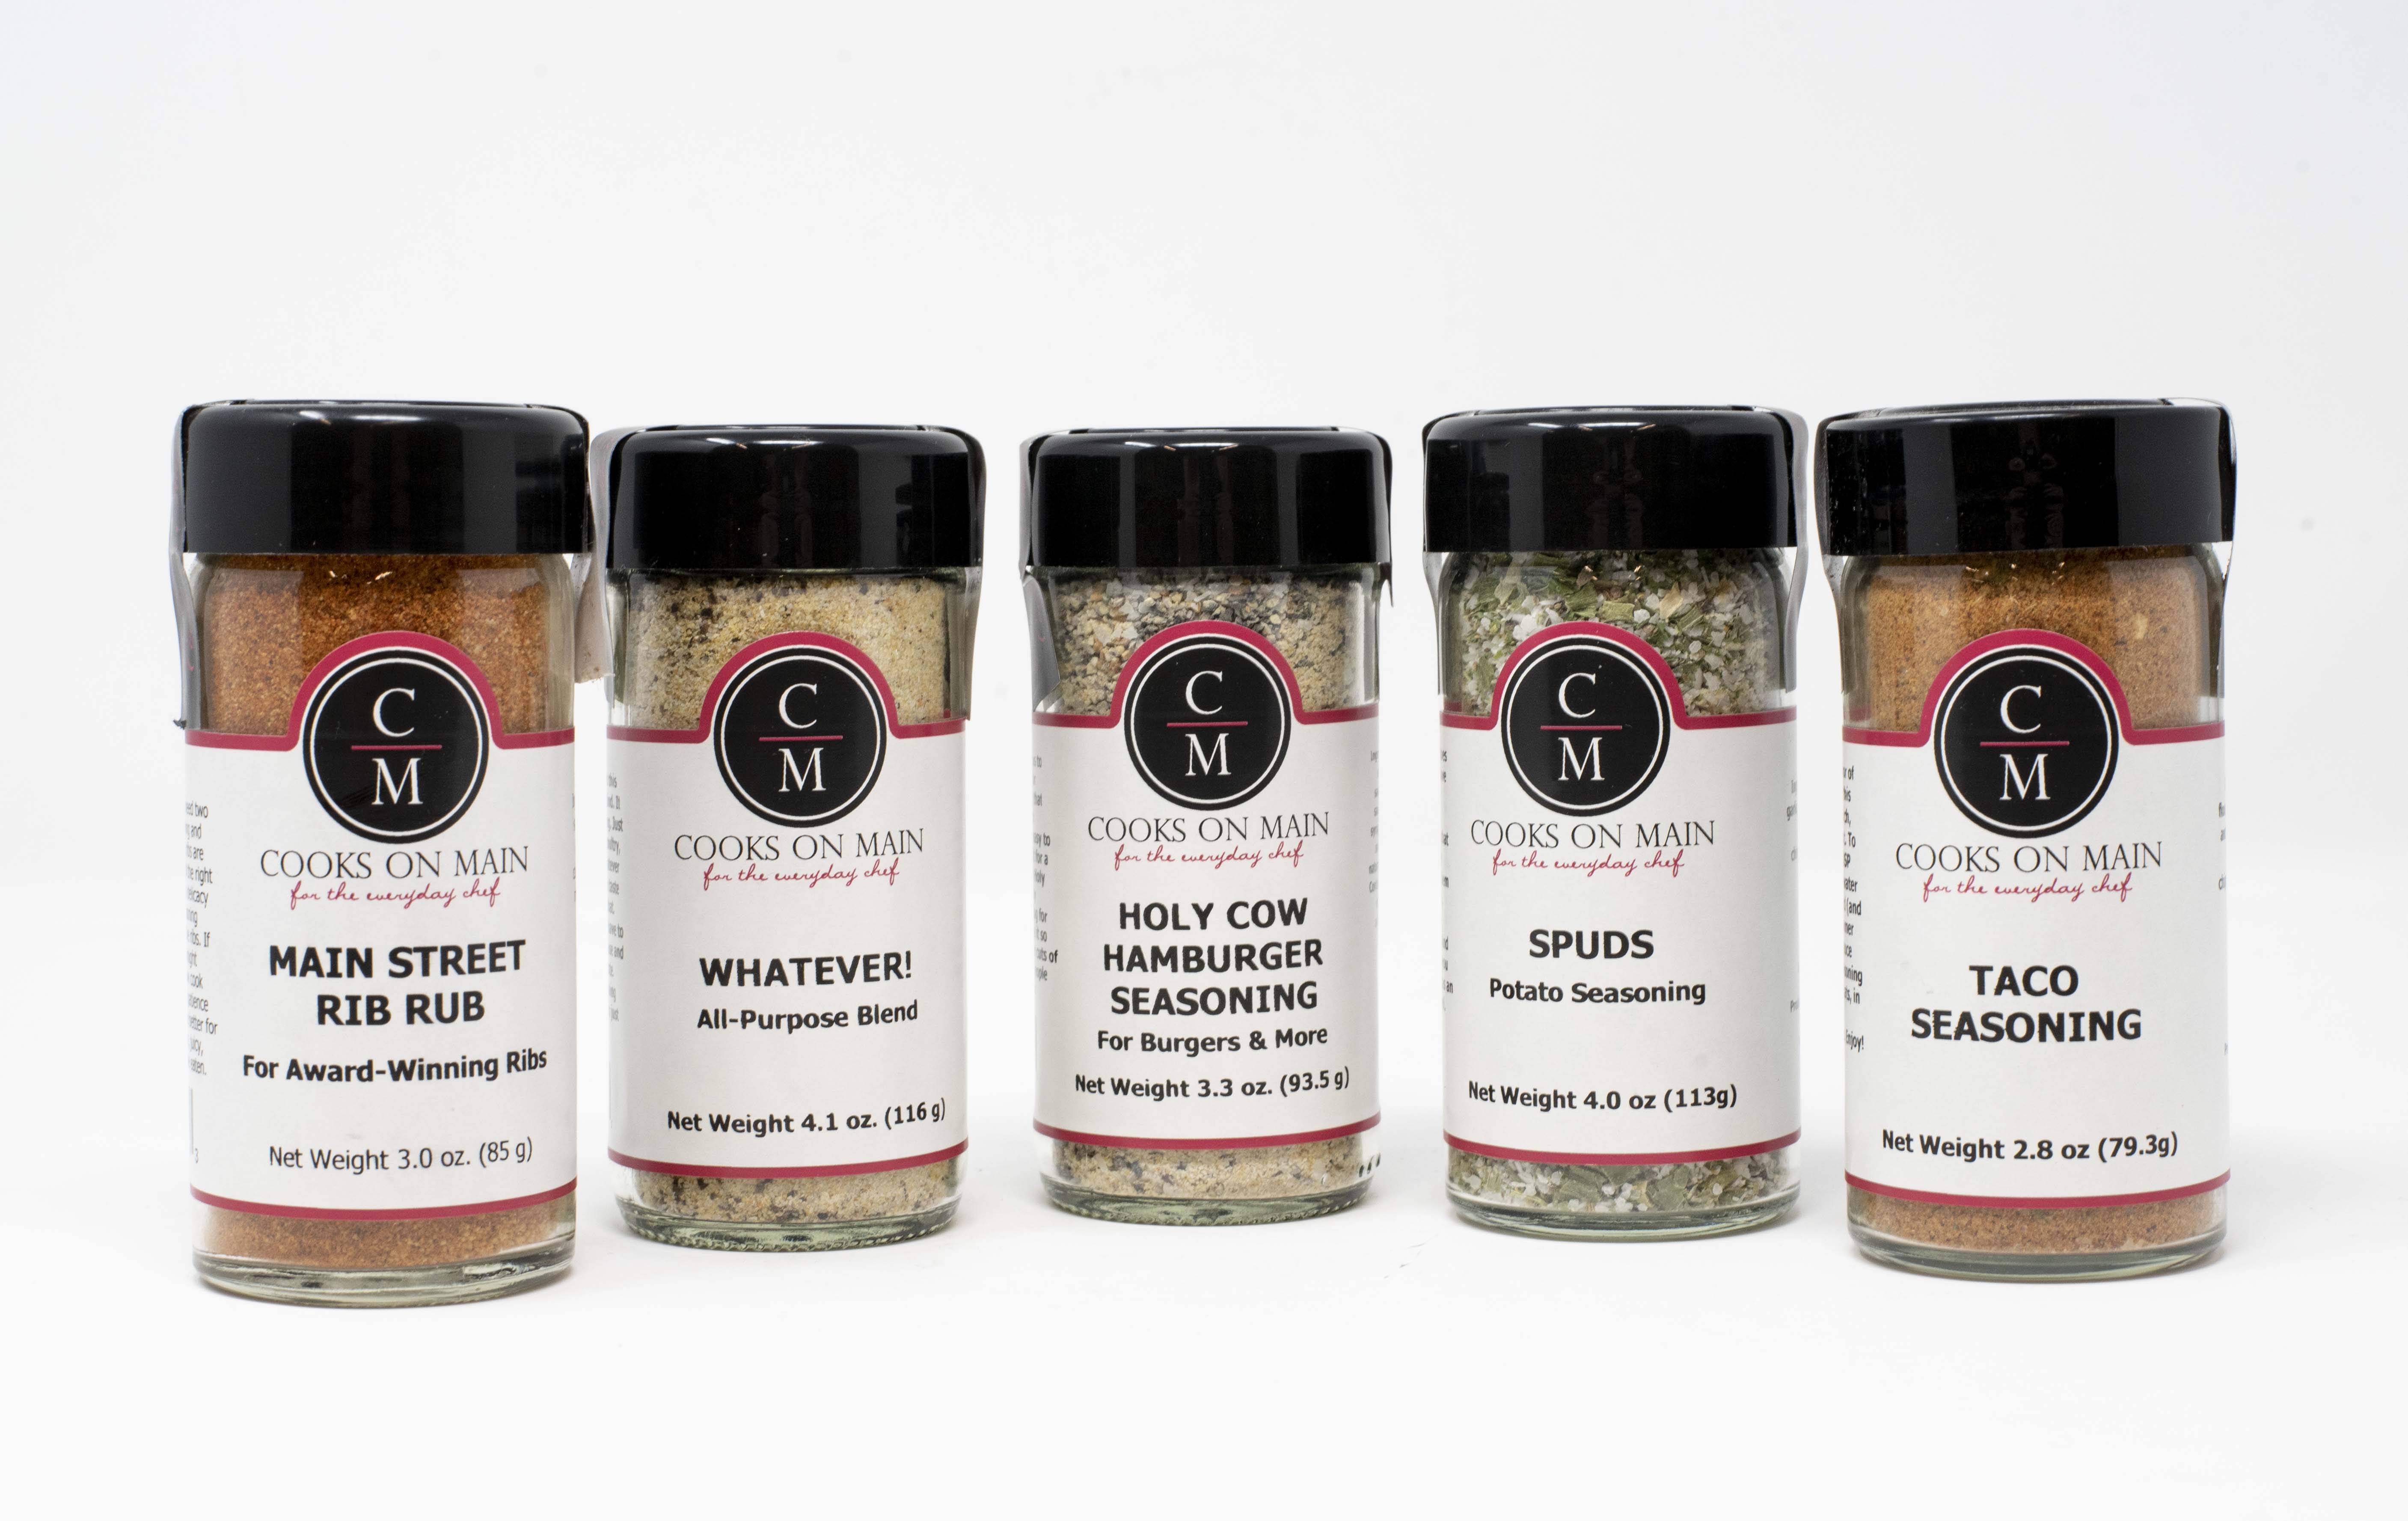 Spice starter kit